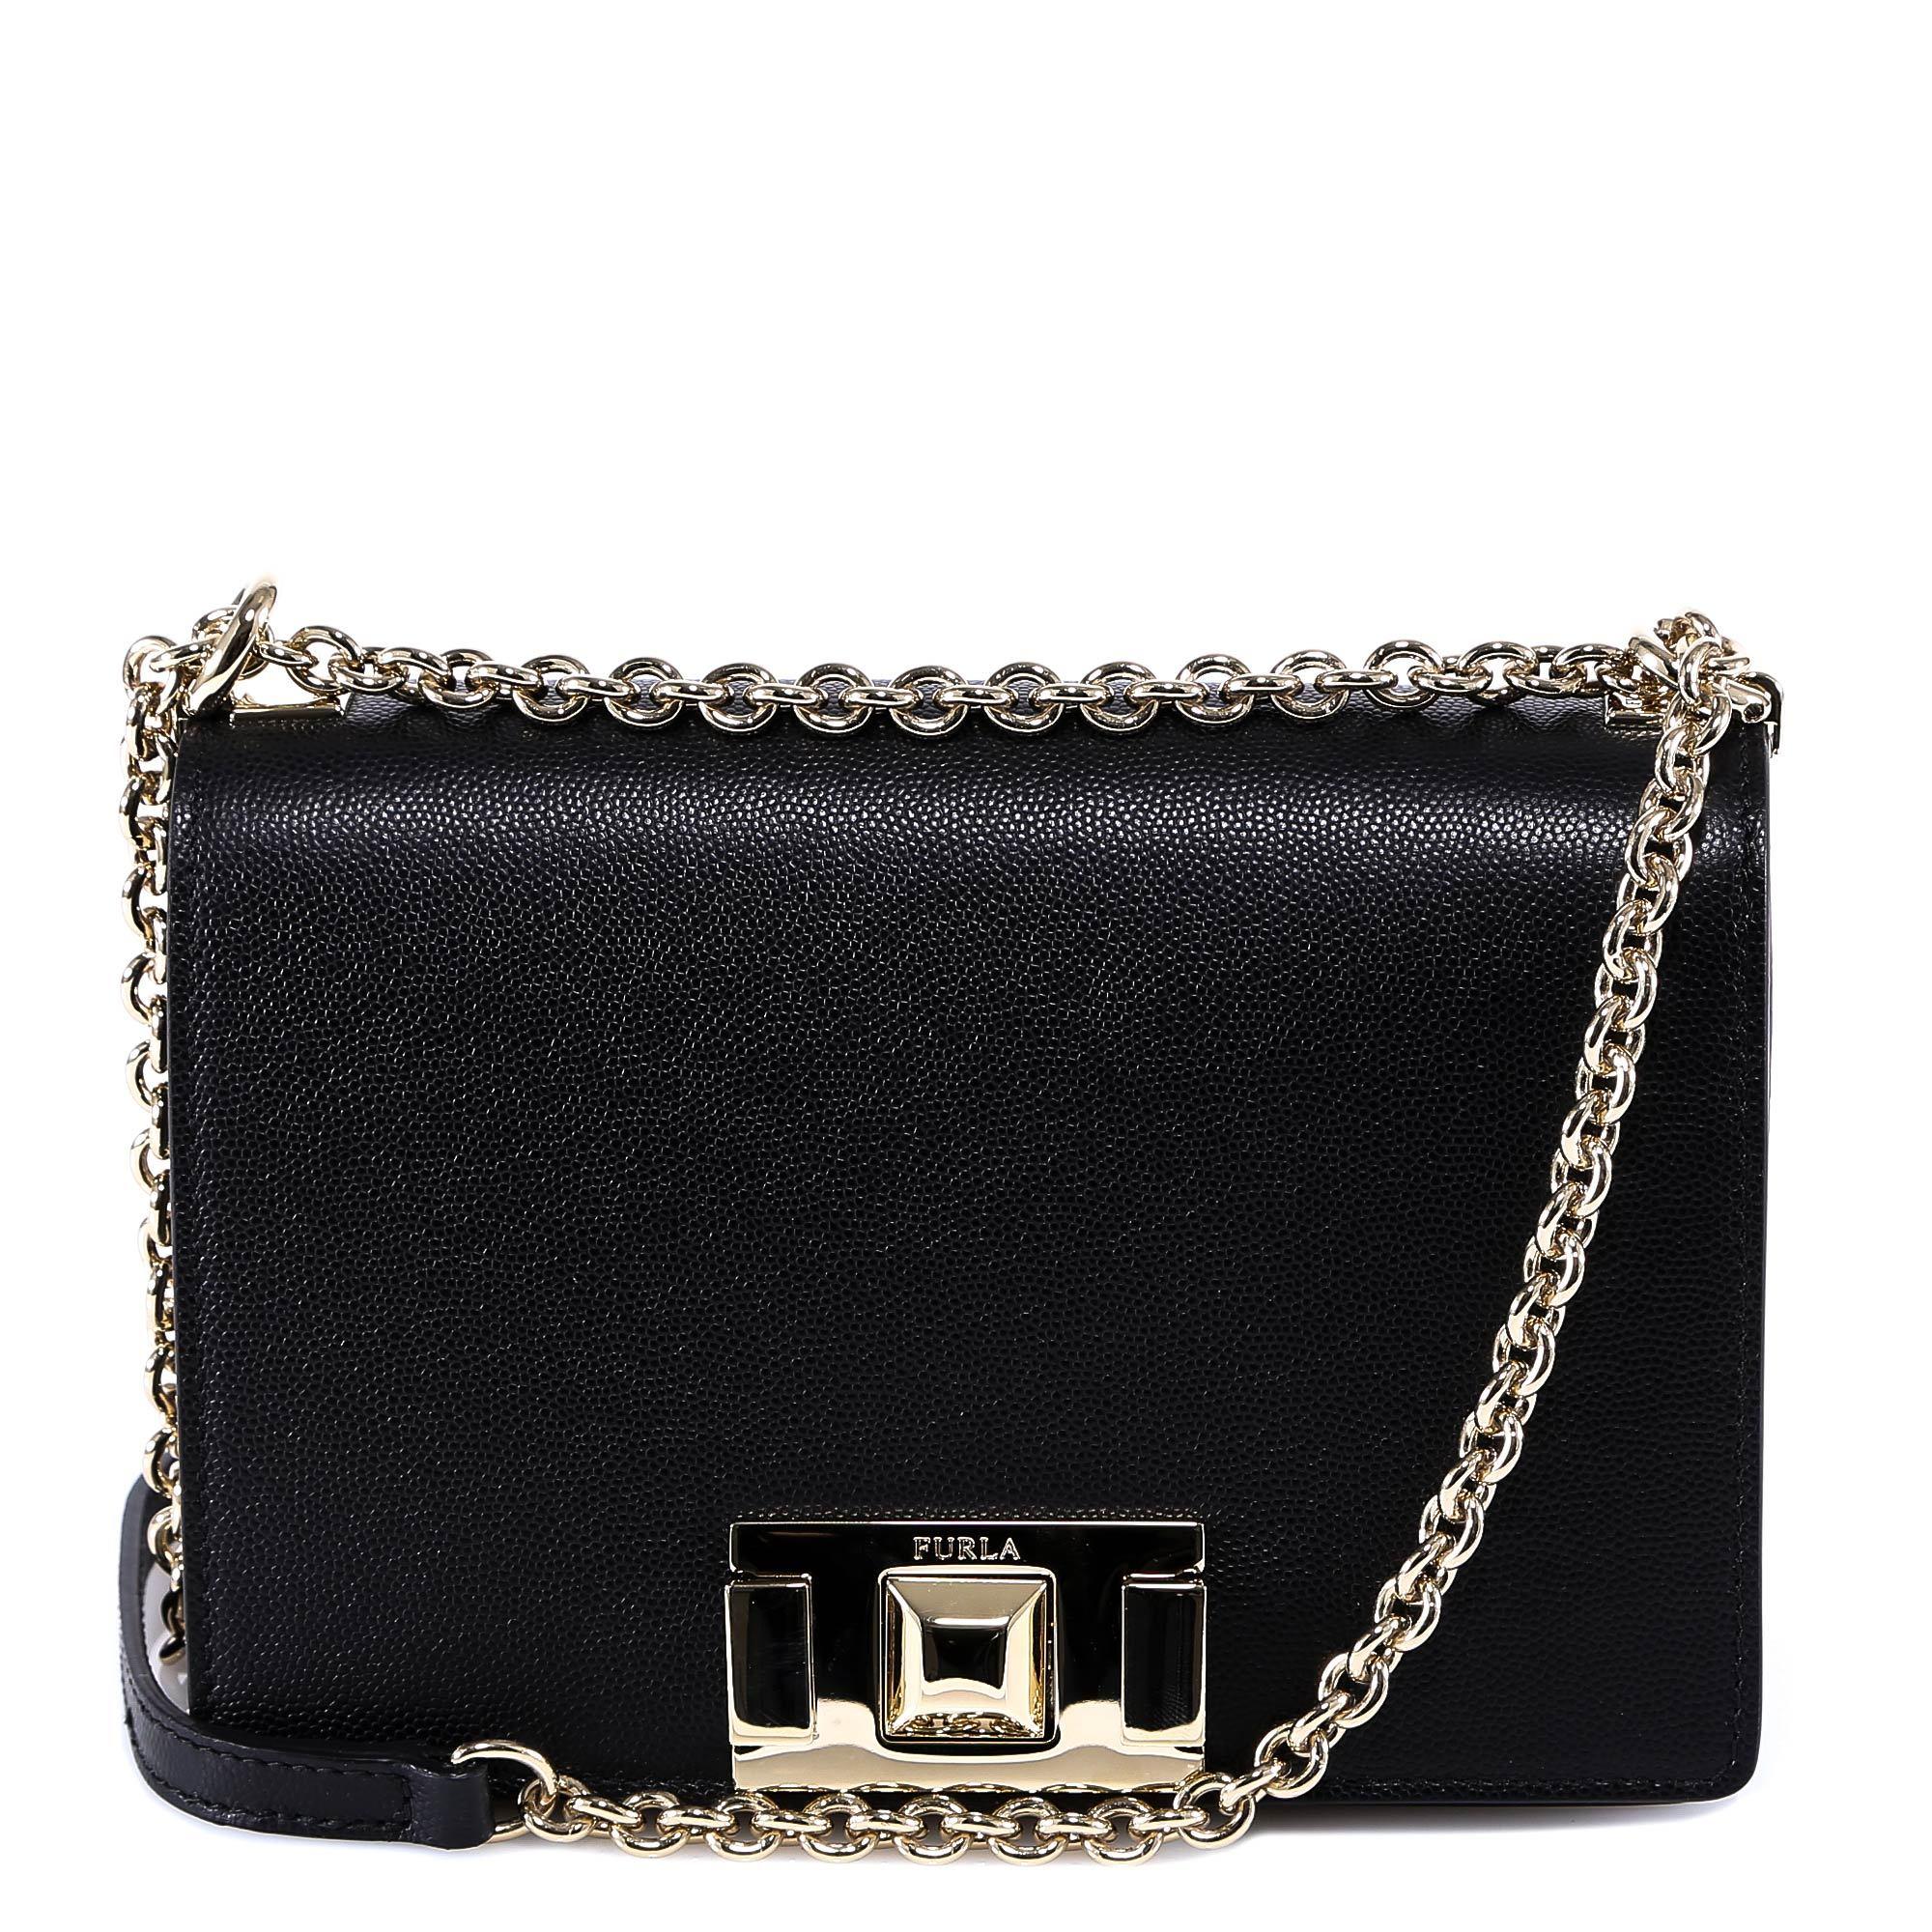 Furla Leather Mimi Mini Crossbody Bag in Black - Lyst